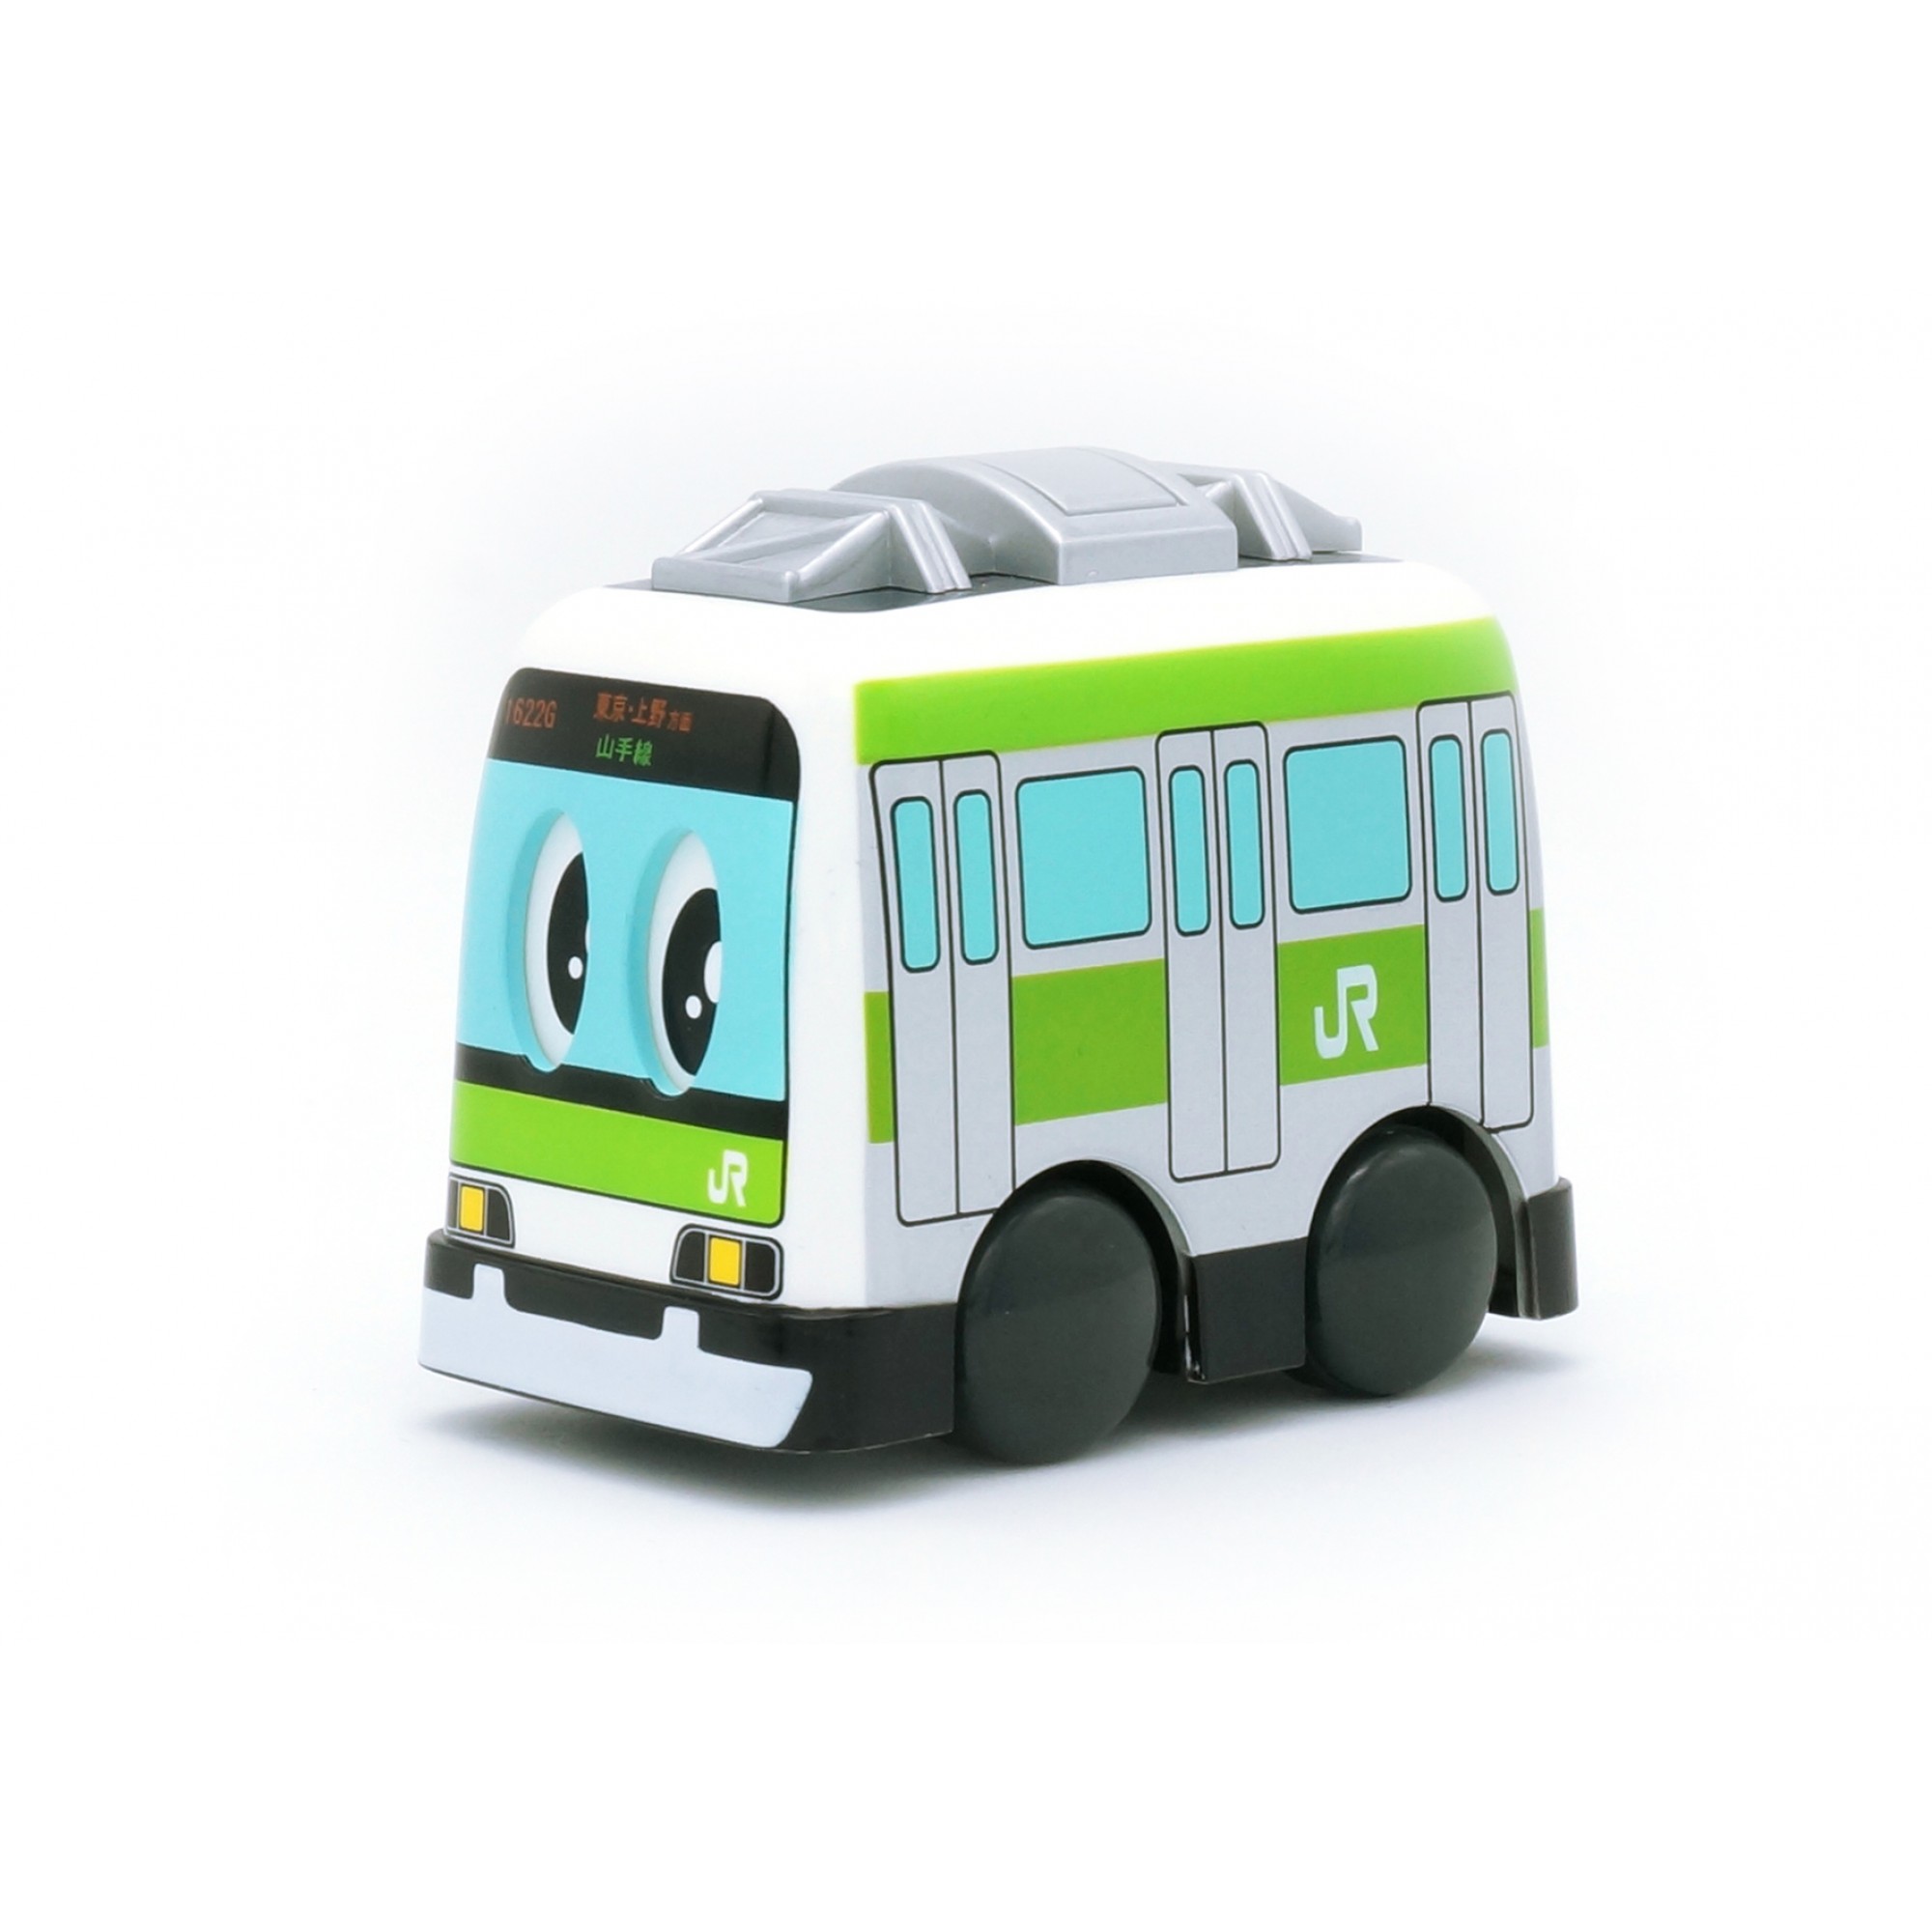 City Trams